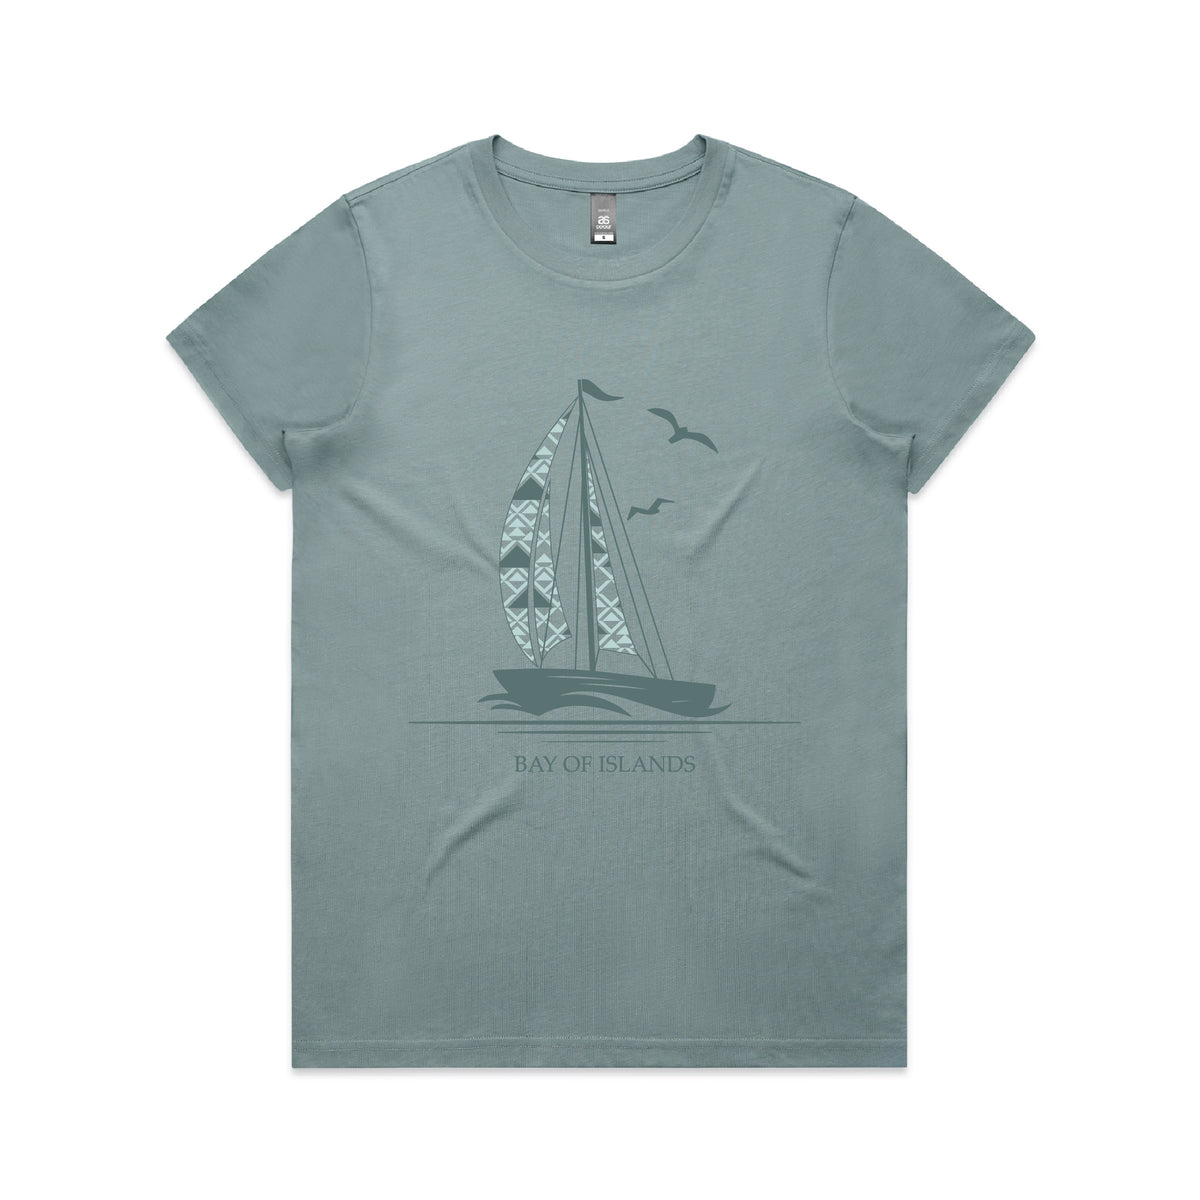 Sailing BOI Womens Tee Shirt